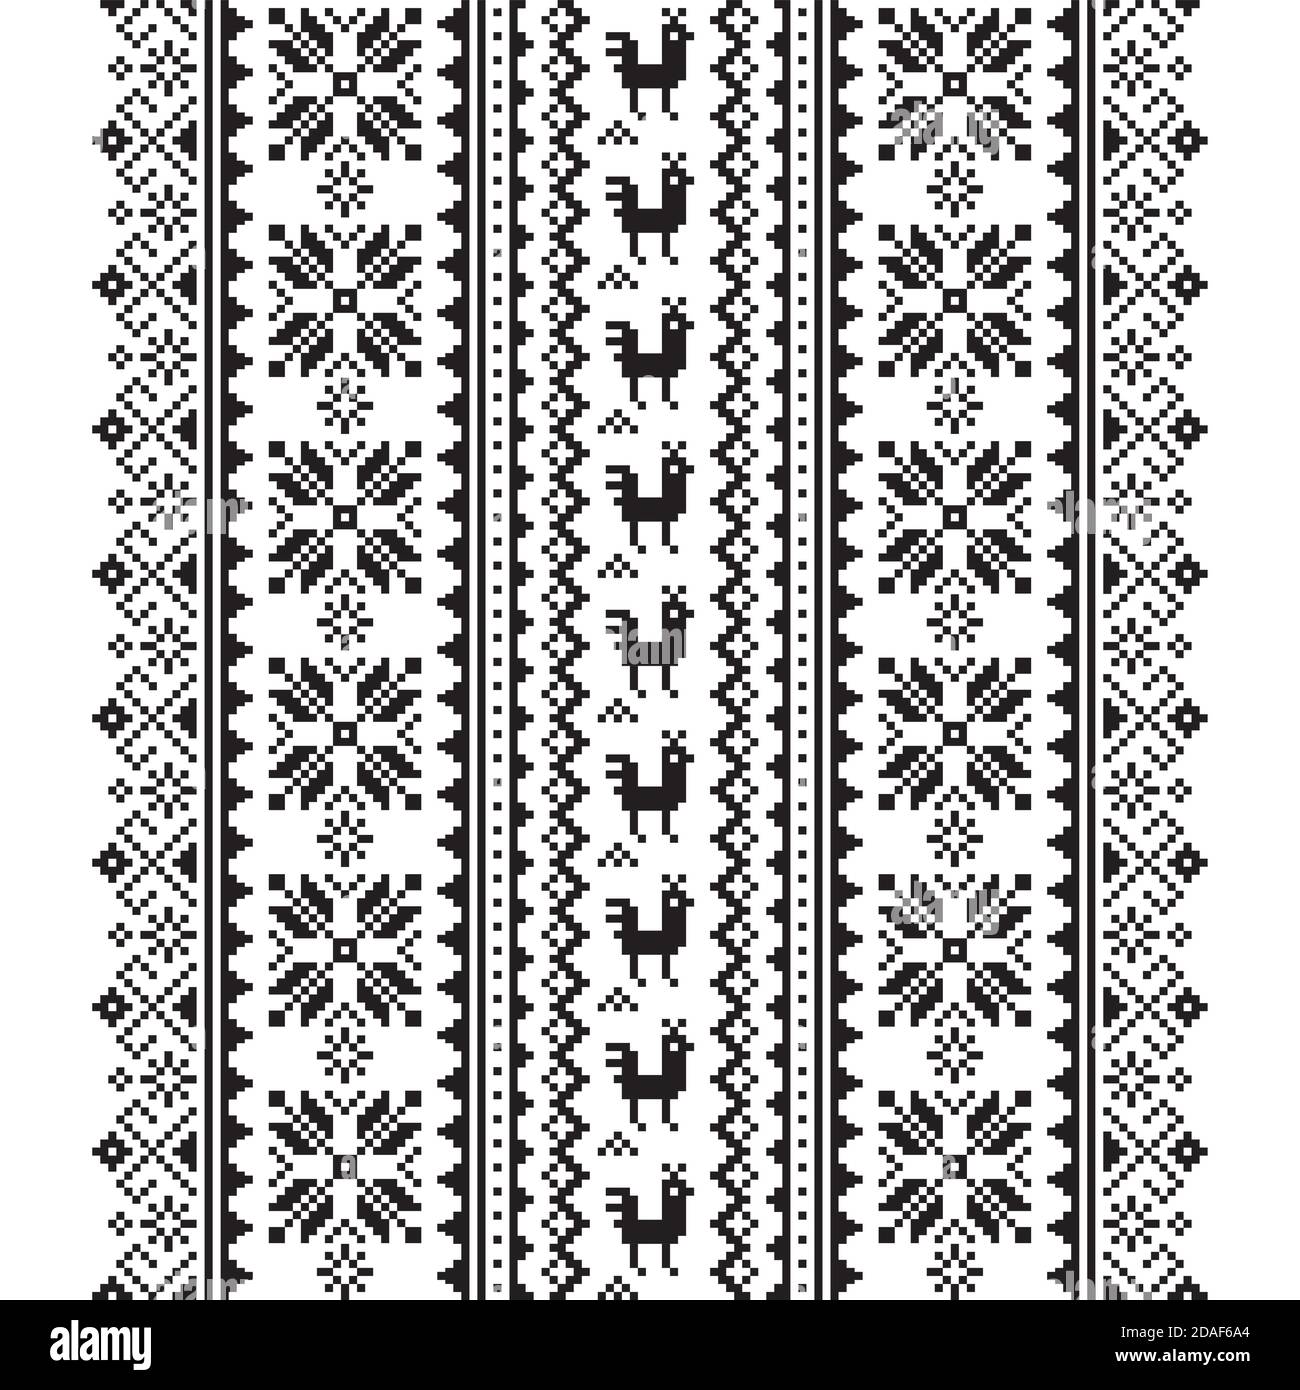 Ukrainian, Belarusian folk art vector seamless pattern in black and white, inspired by traditional cross-stitch design Vyshyvanka Stock Vector